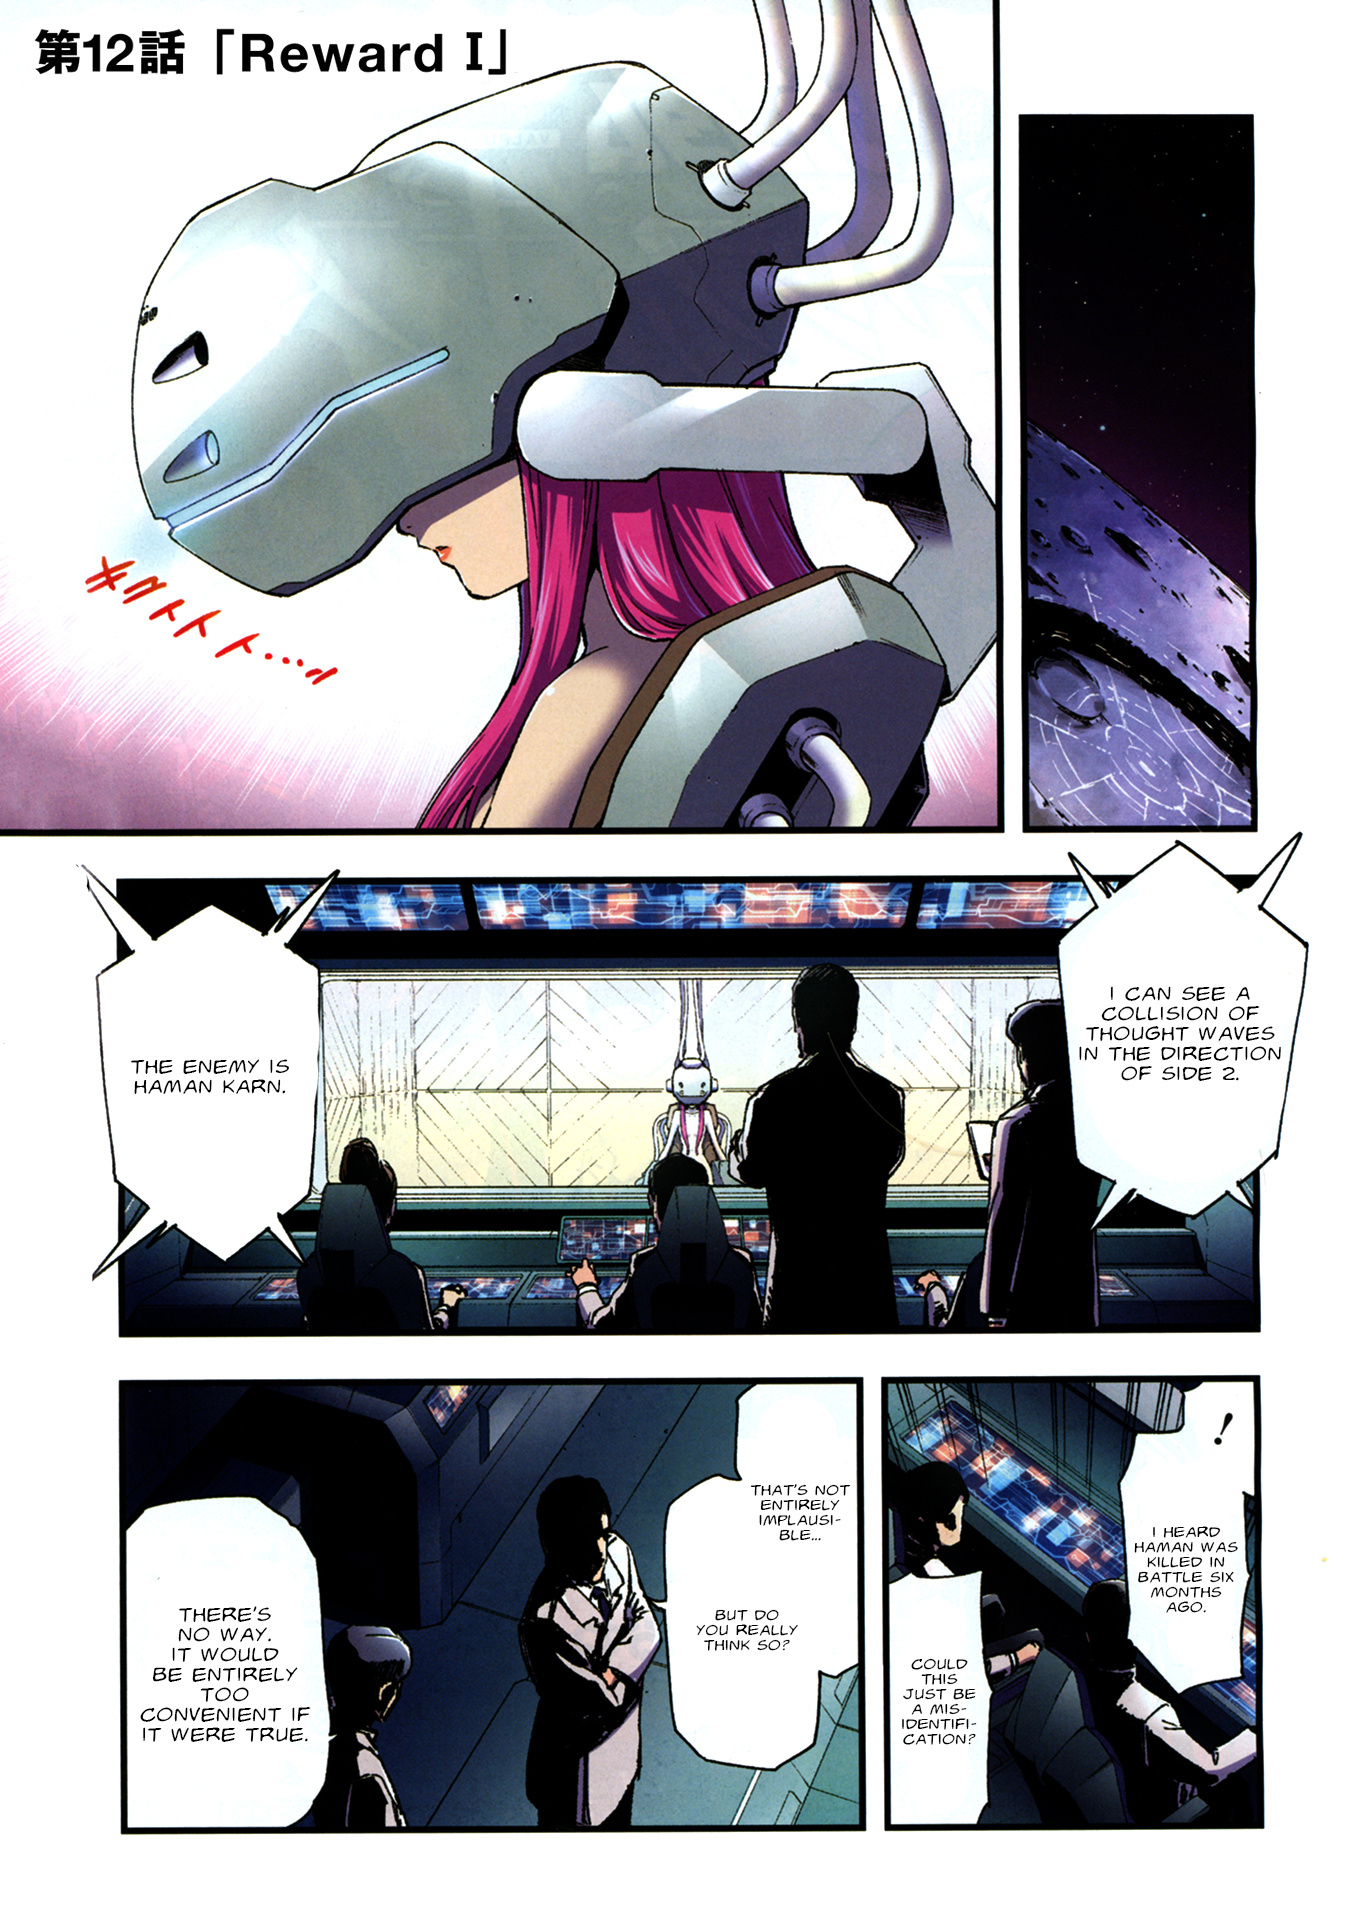 Mobile Suit Gundam Walpurgis Vol.3 Chapter 12: Reward I - Picture 1